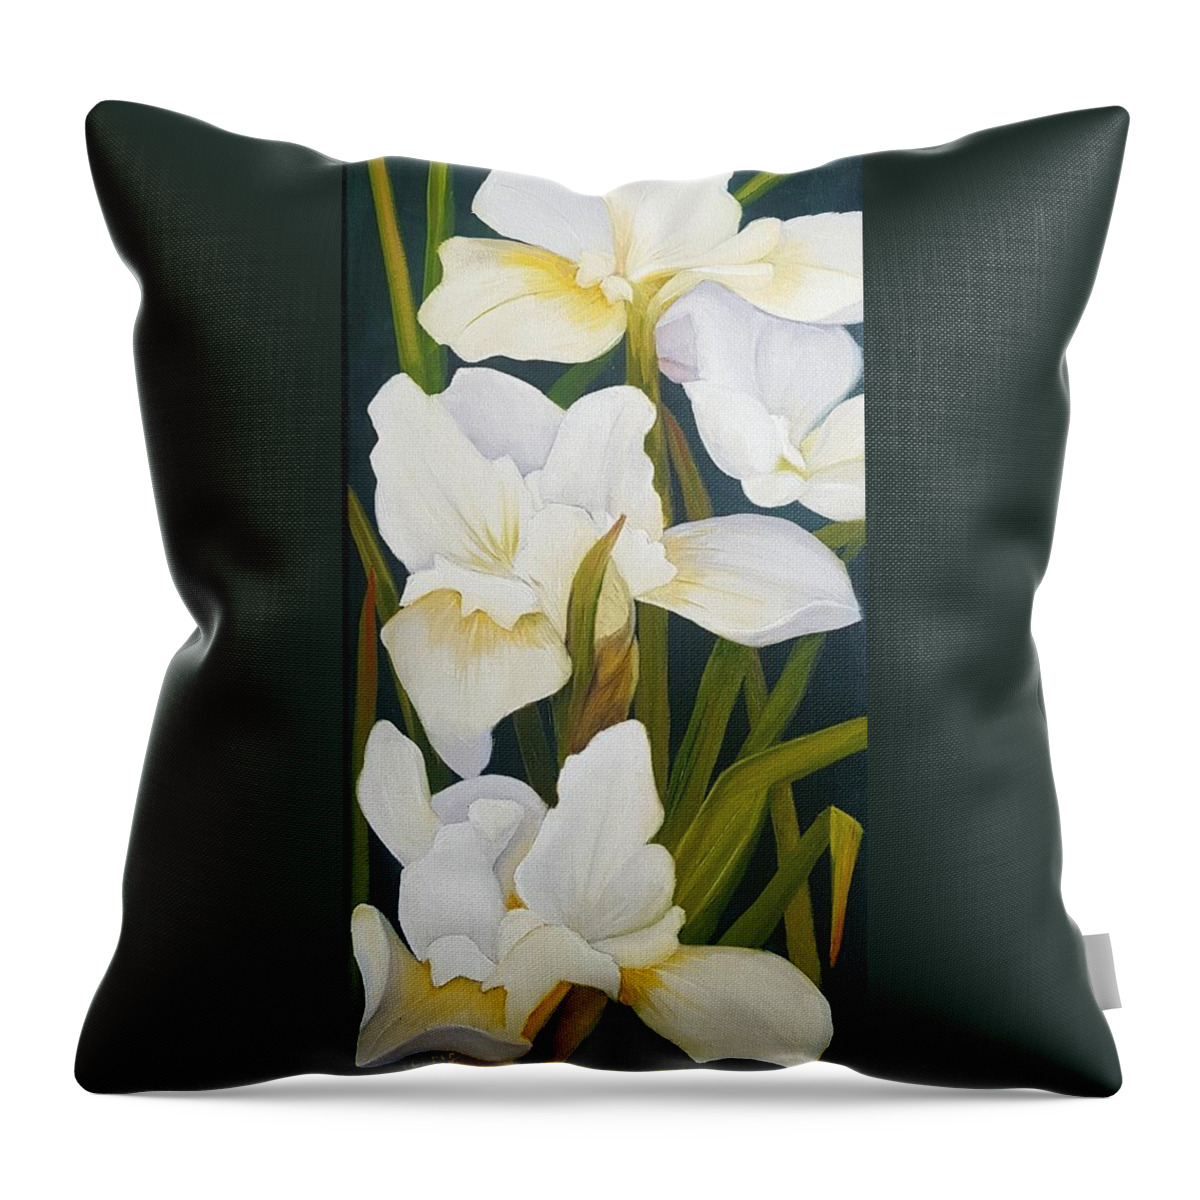 White Iris Throw Pillow featuring the painting White Siberian Iris by Connie Rish